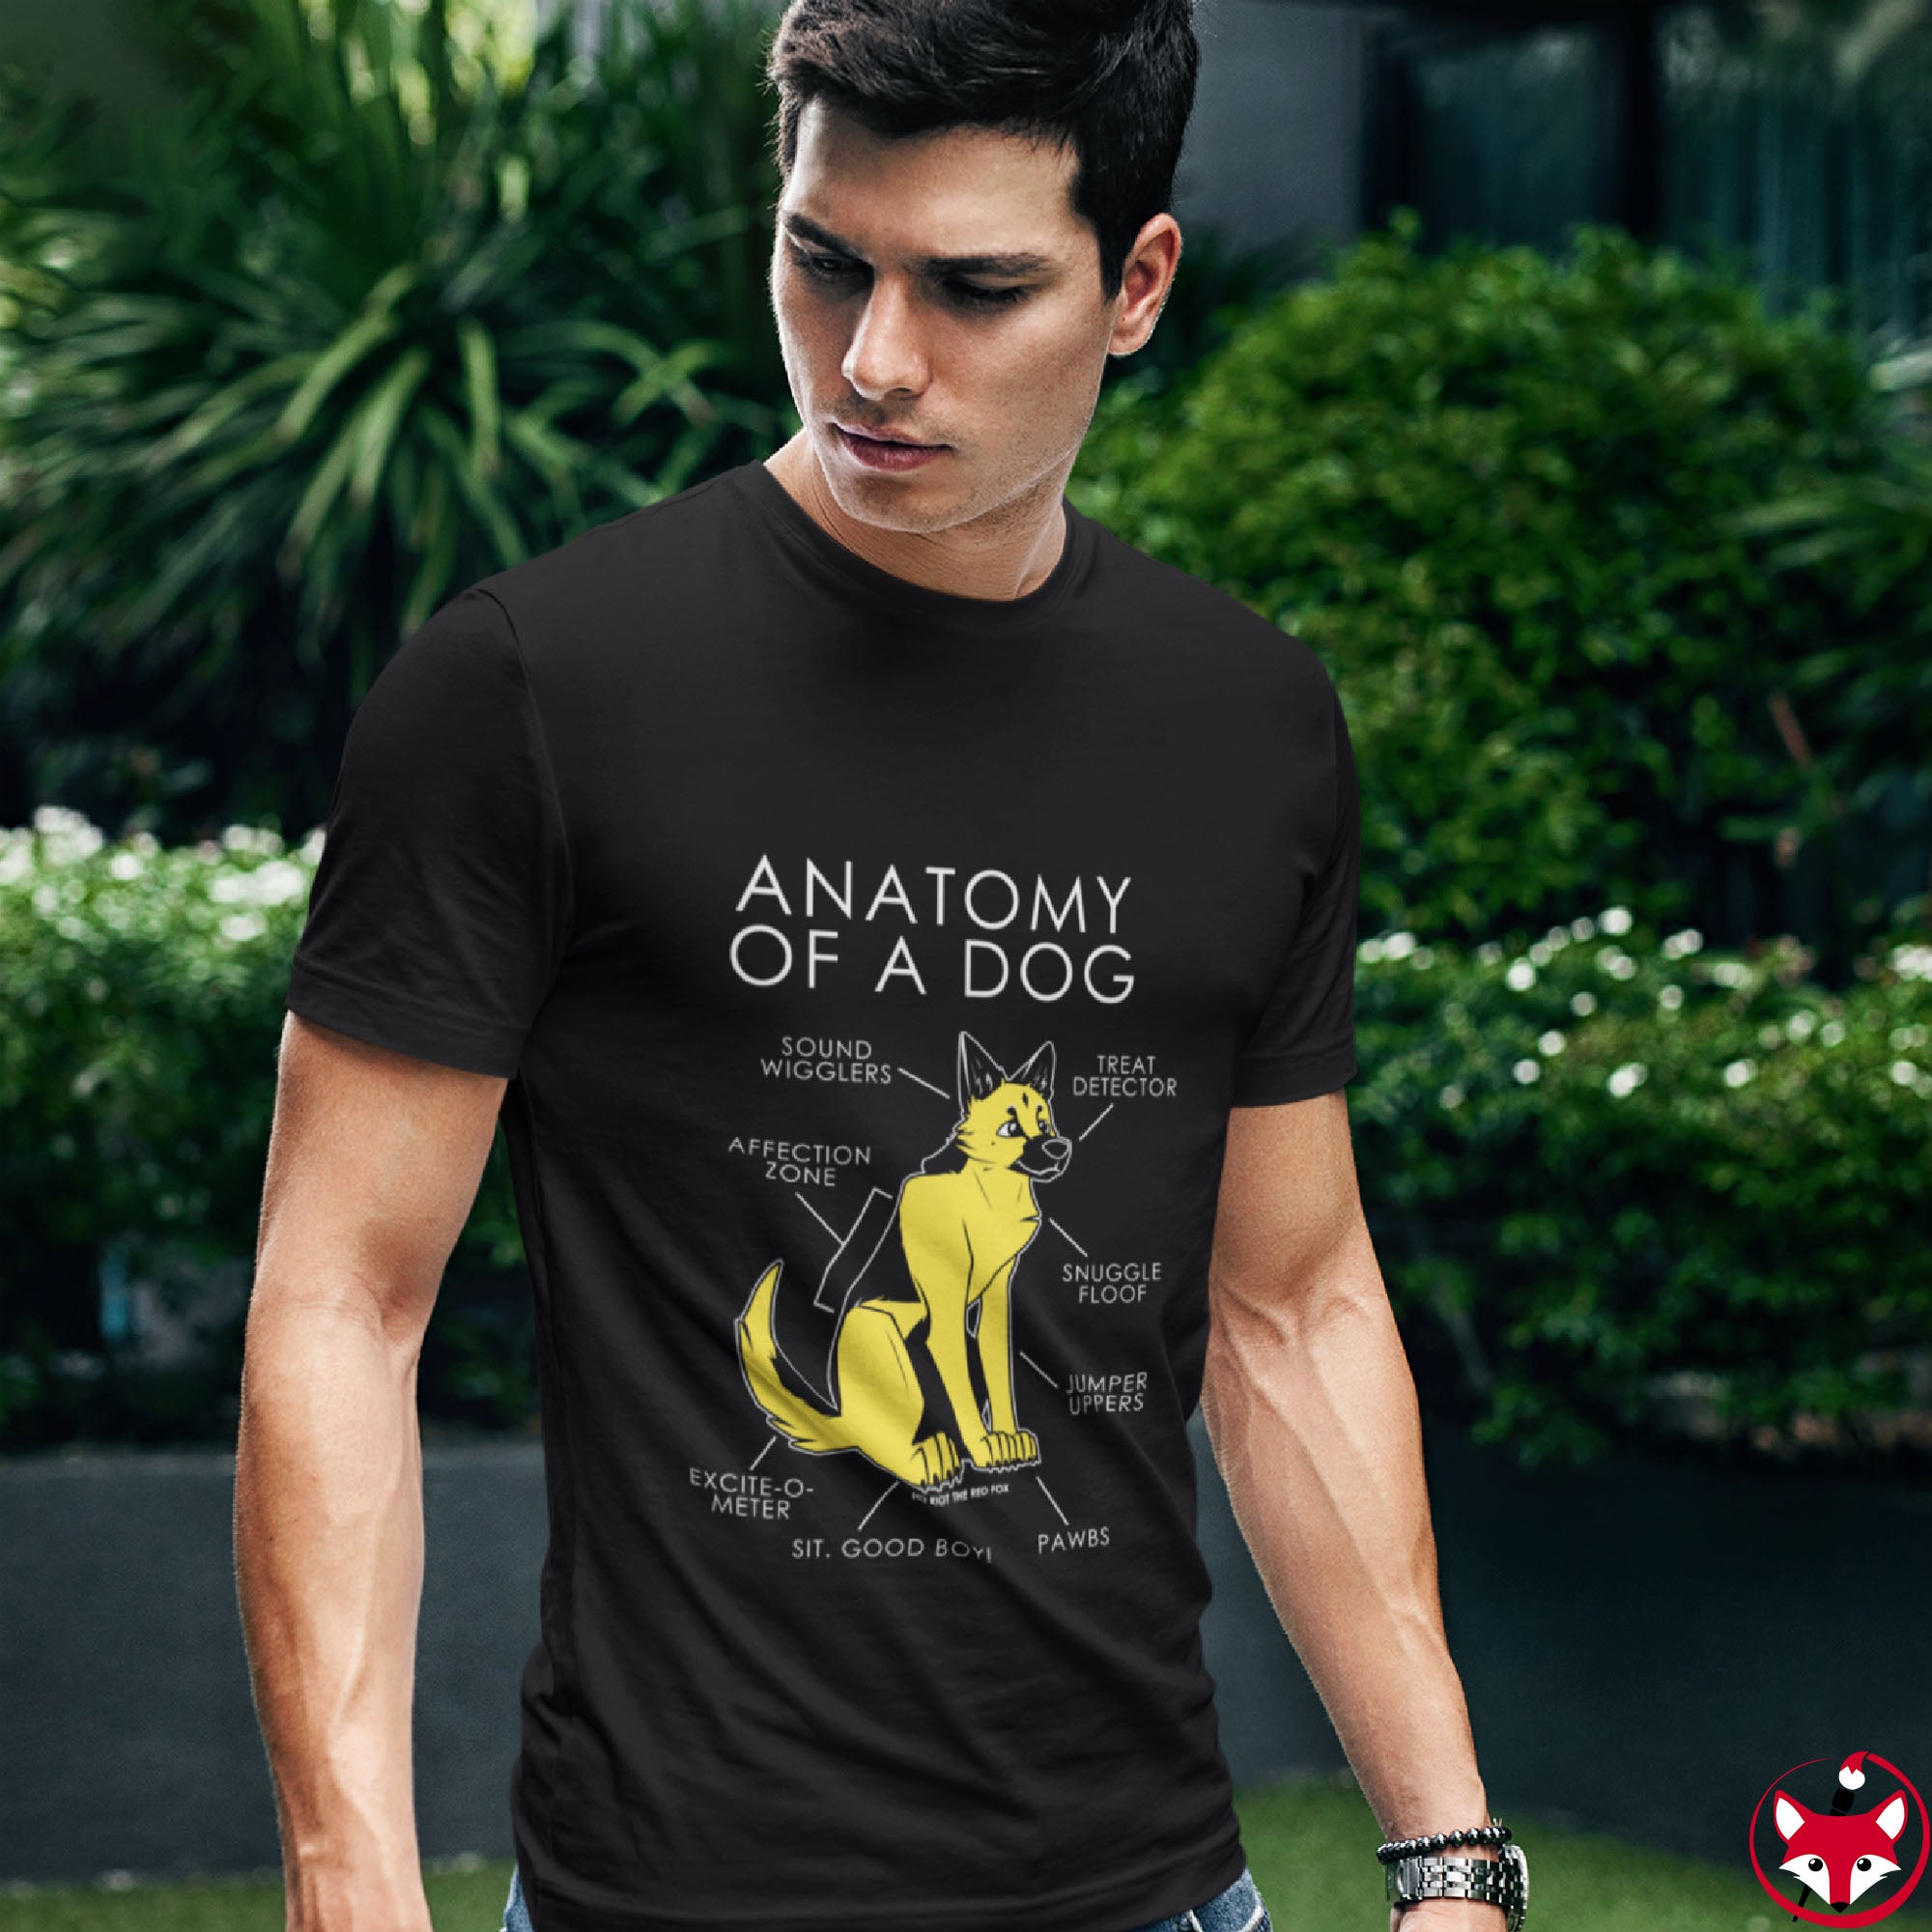 Dog Yellow - T-Shirt T-Shirt Artworktee 